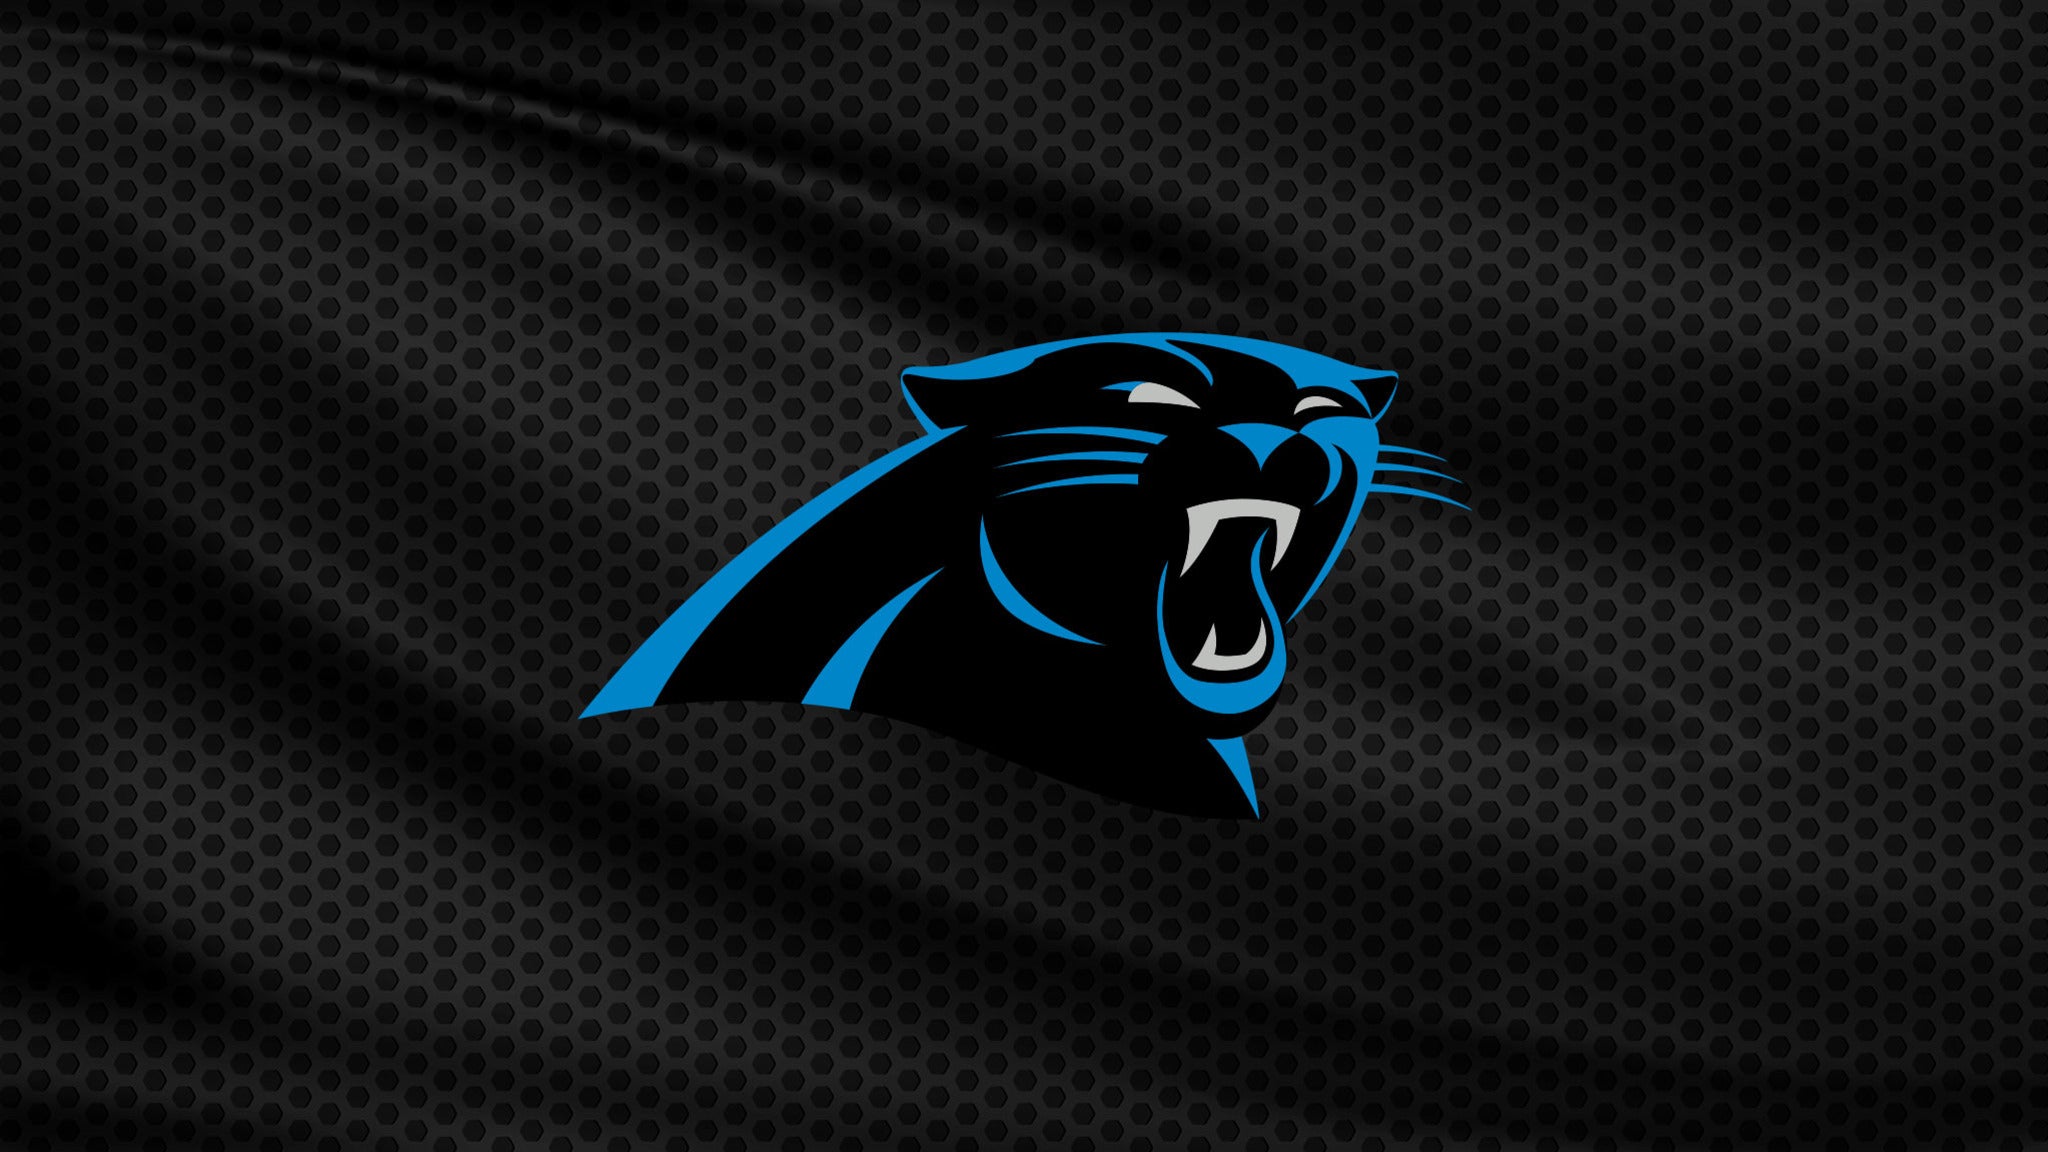 Carolina Panthers NFL Draft Party presale information on freepresalepasswords.com